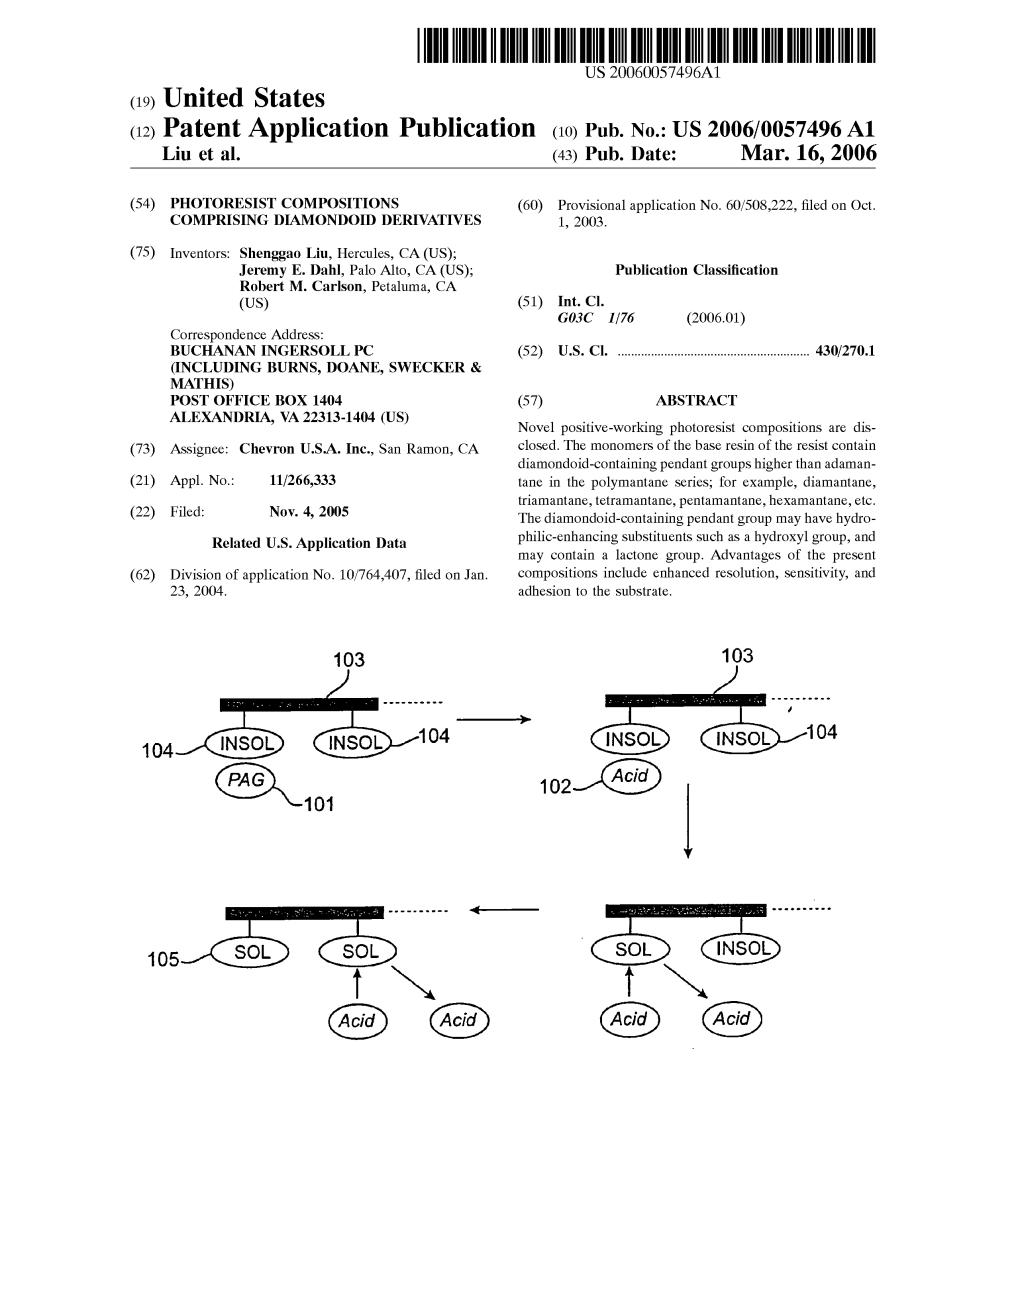 (12) Patent Application Publication (10) Pub. No.: US 2006/0057496 A1 Liu Et Al